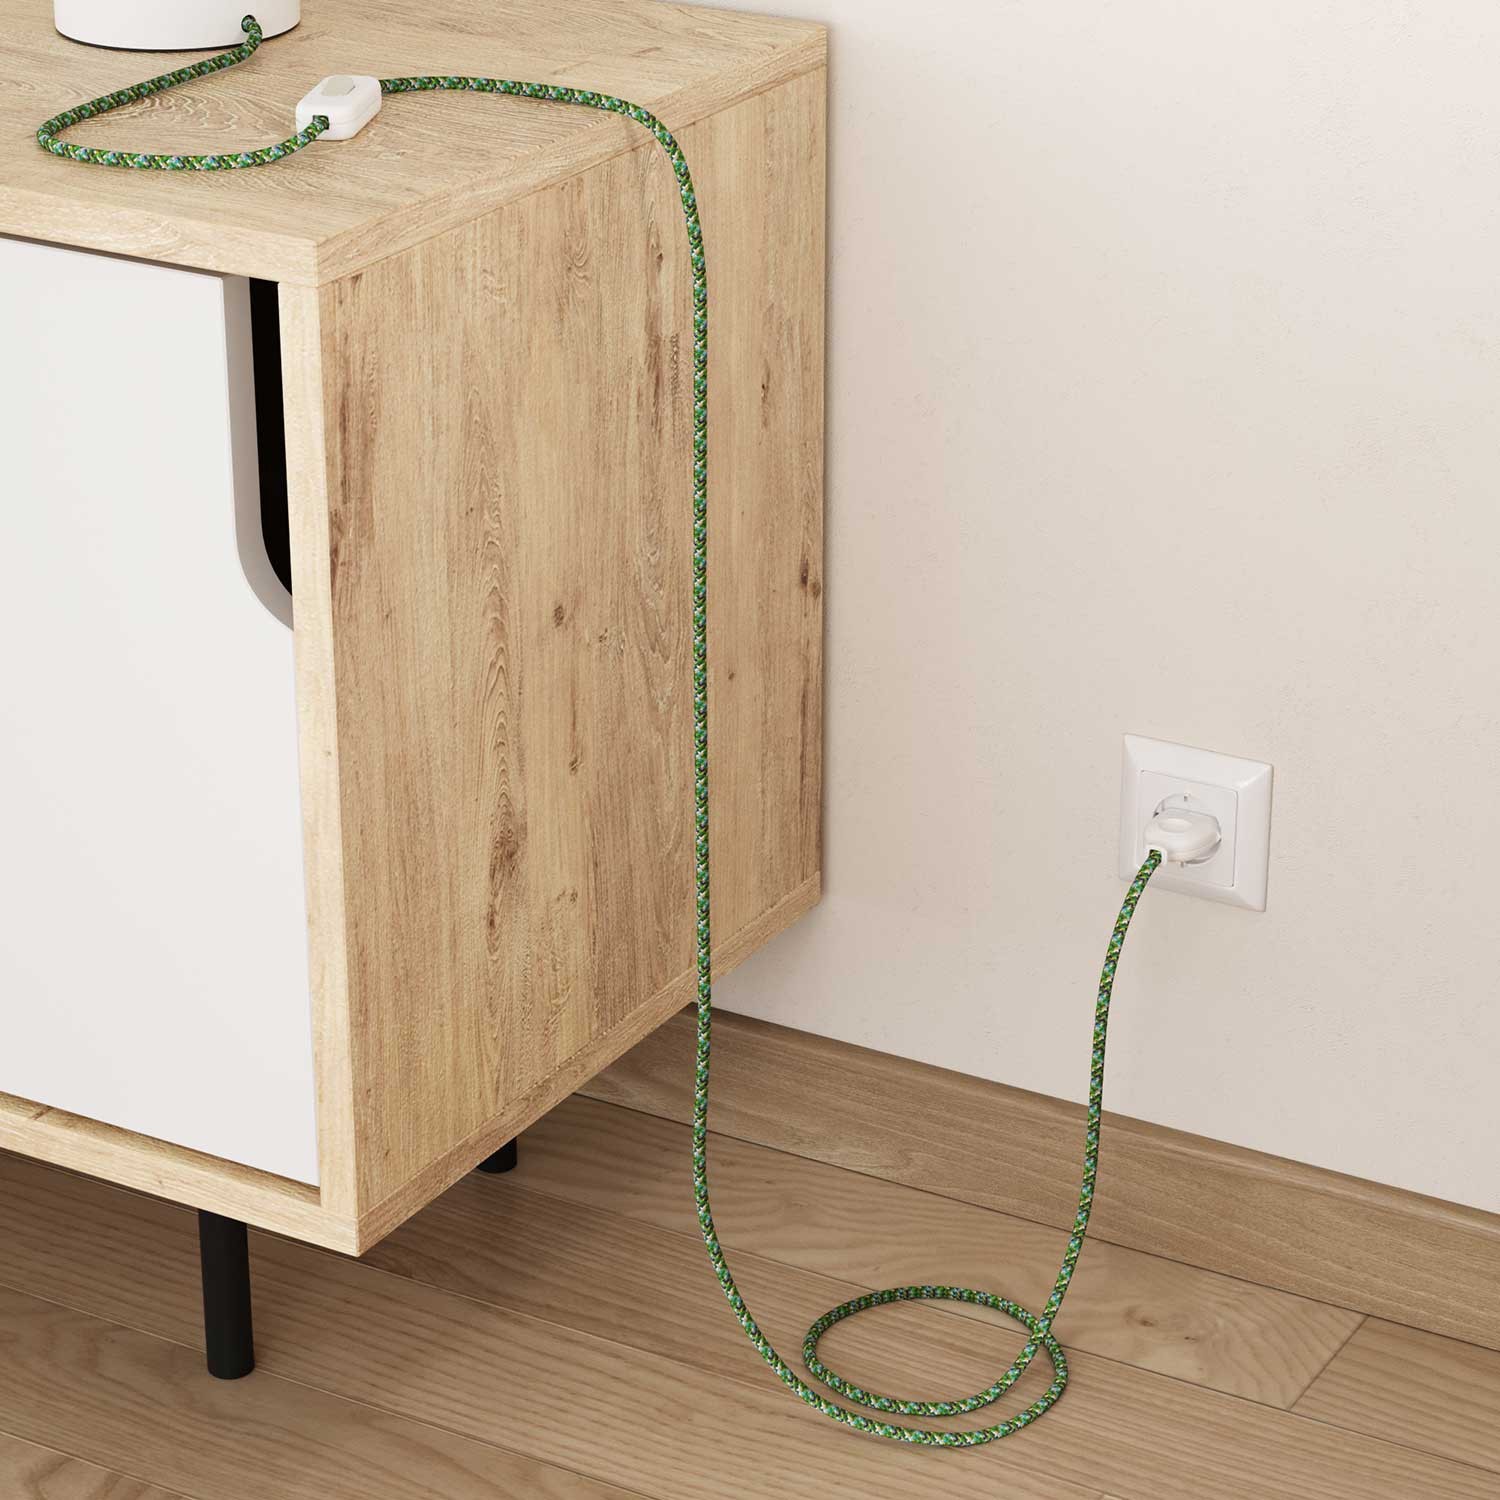 Okrúhly textilný elektrický kábel, umelý hodváb, pixelovaný, RX05 Pixel zelená